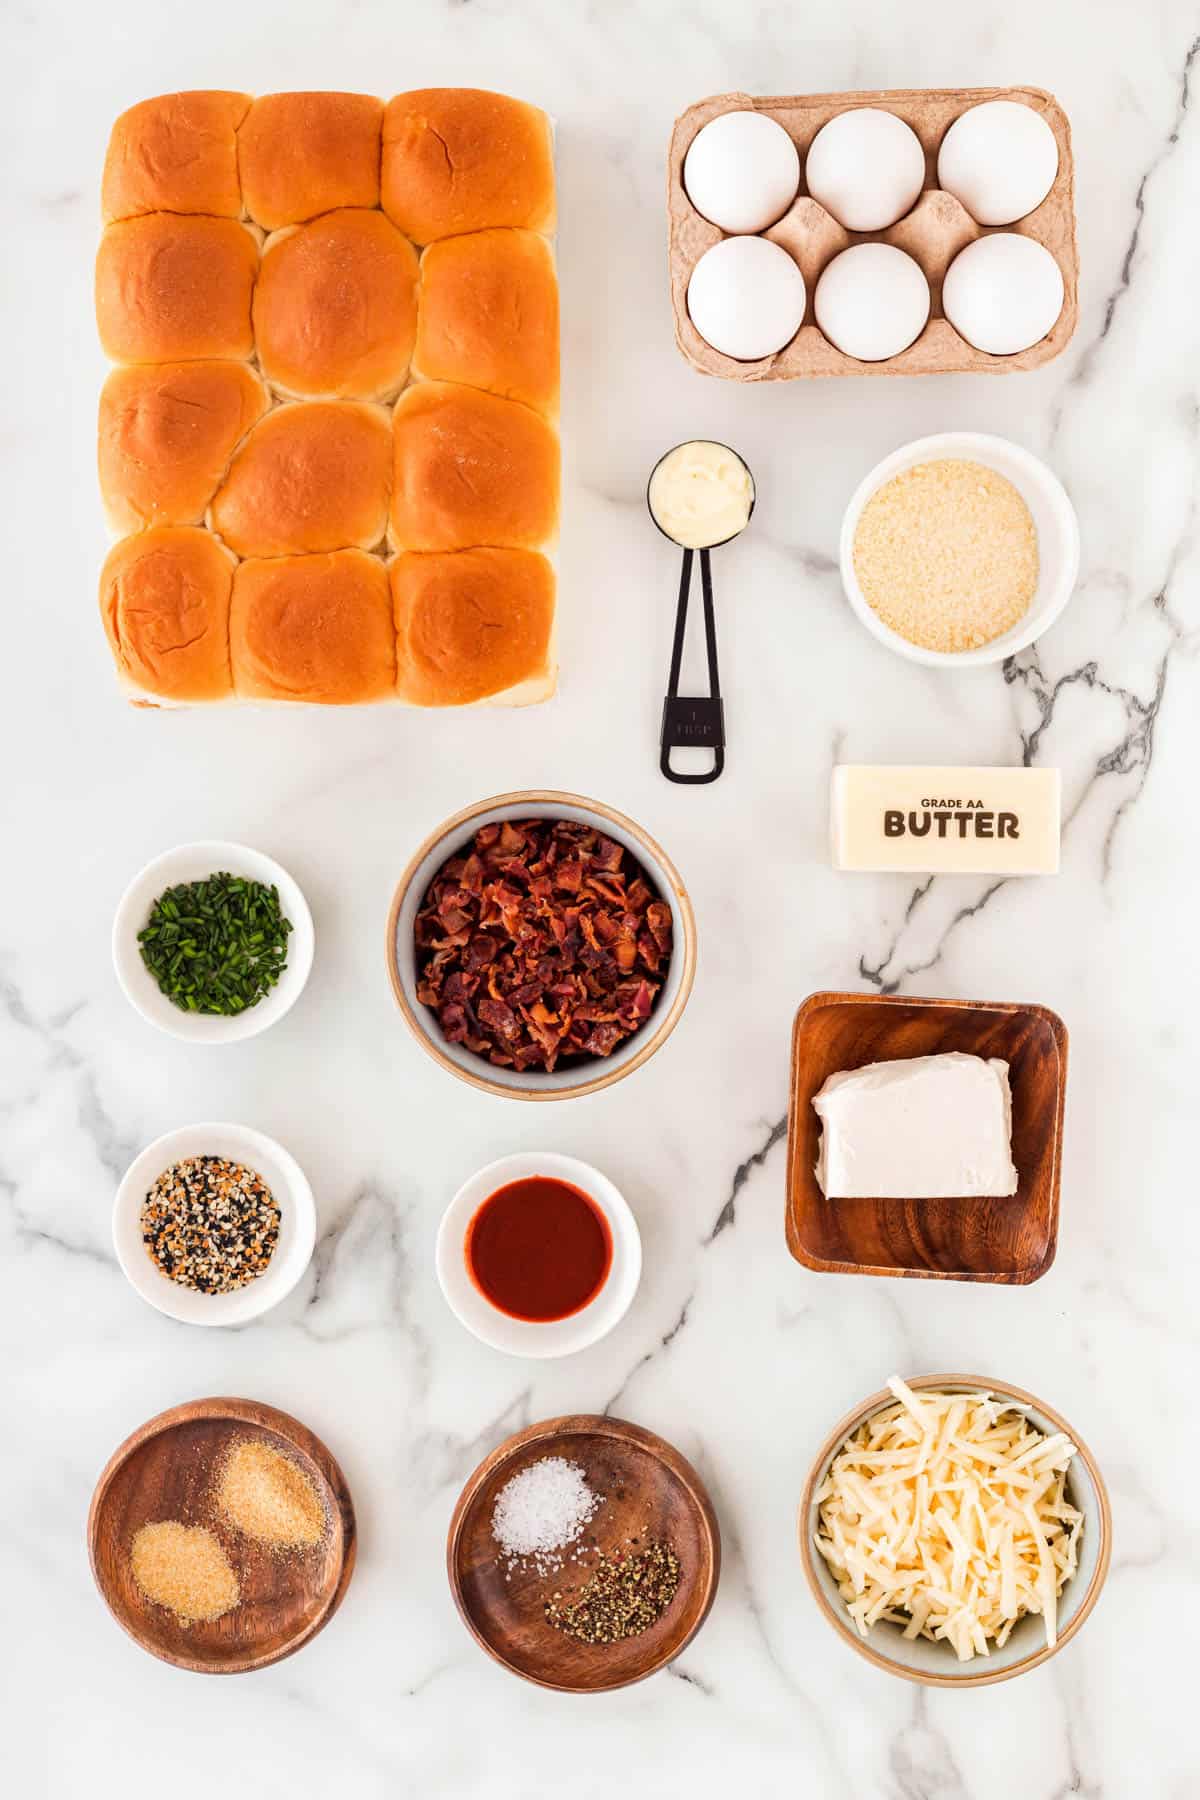 Ingredients for Stuffed Bacon Egg Breakfast Sliders. 